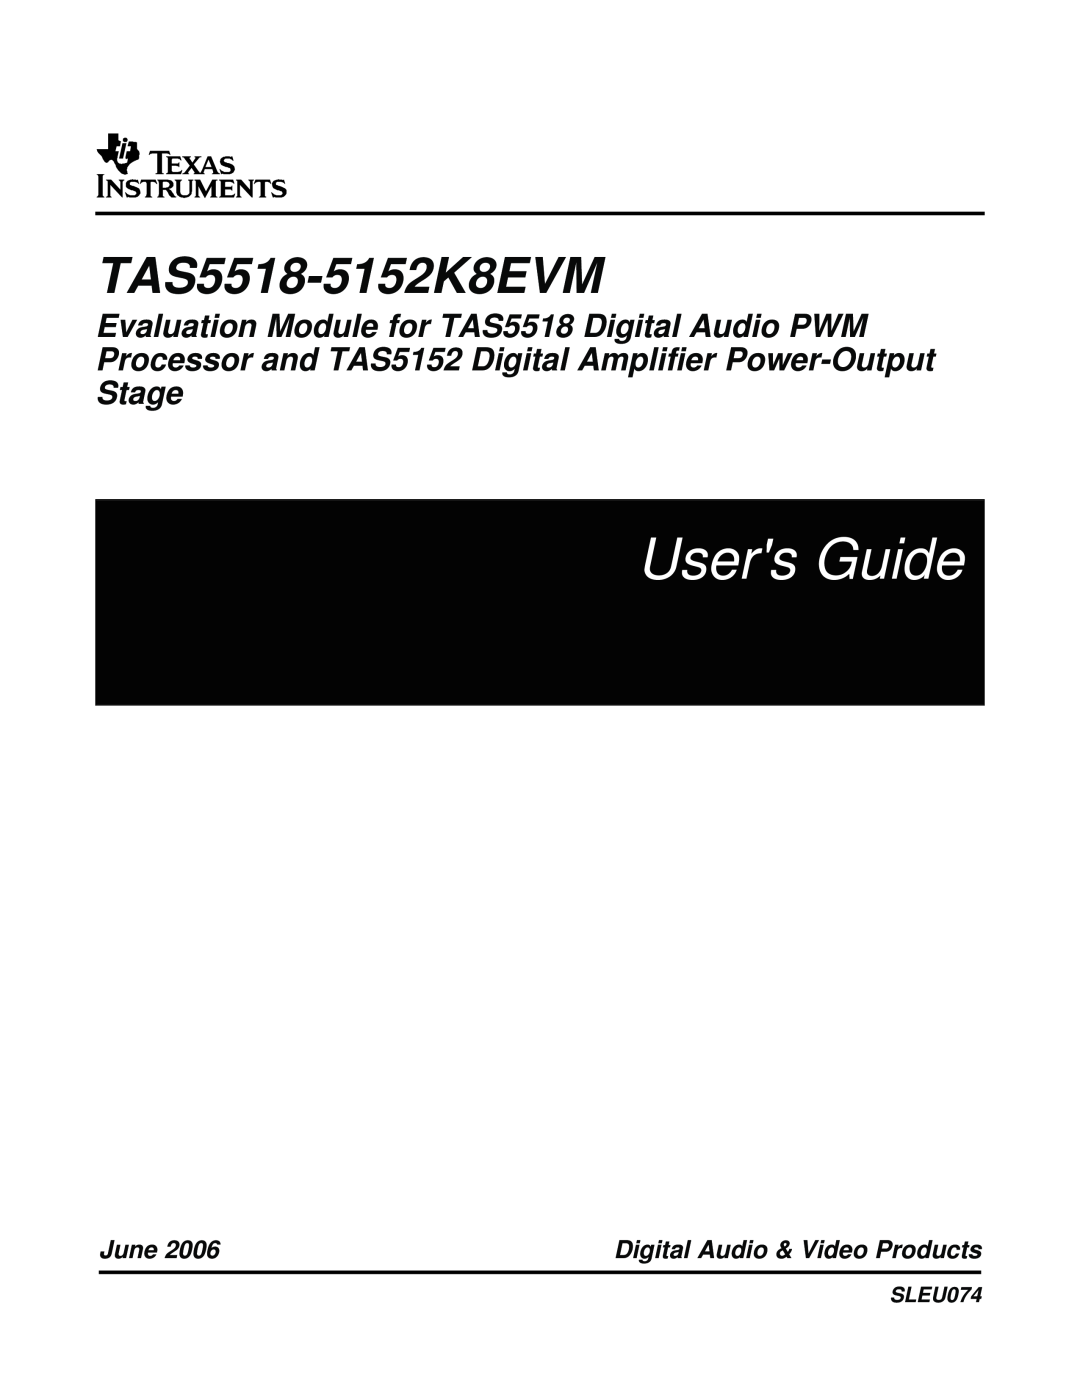 Texas Instruments manual Users Guide, TAS5518-5152K8EVM, June, Digital Audio & Video Products, SLEU074 